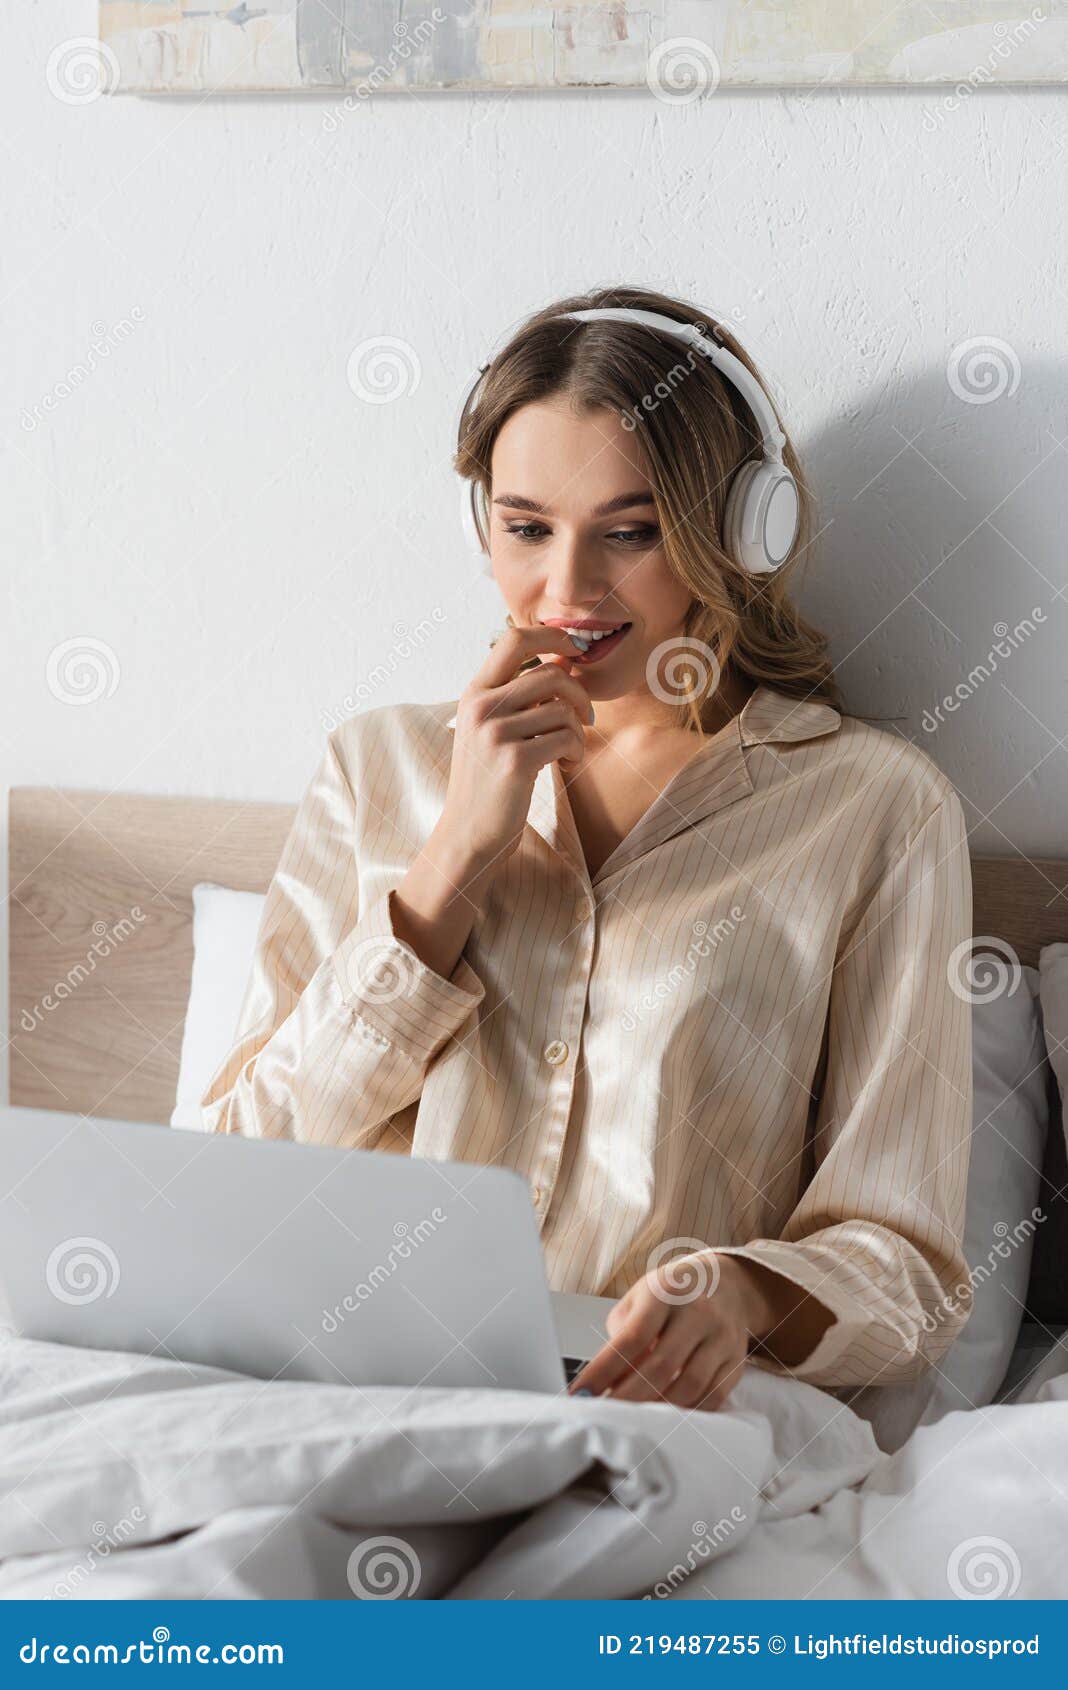 young teleworker in headphones using blurred